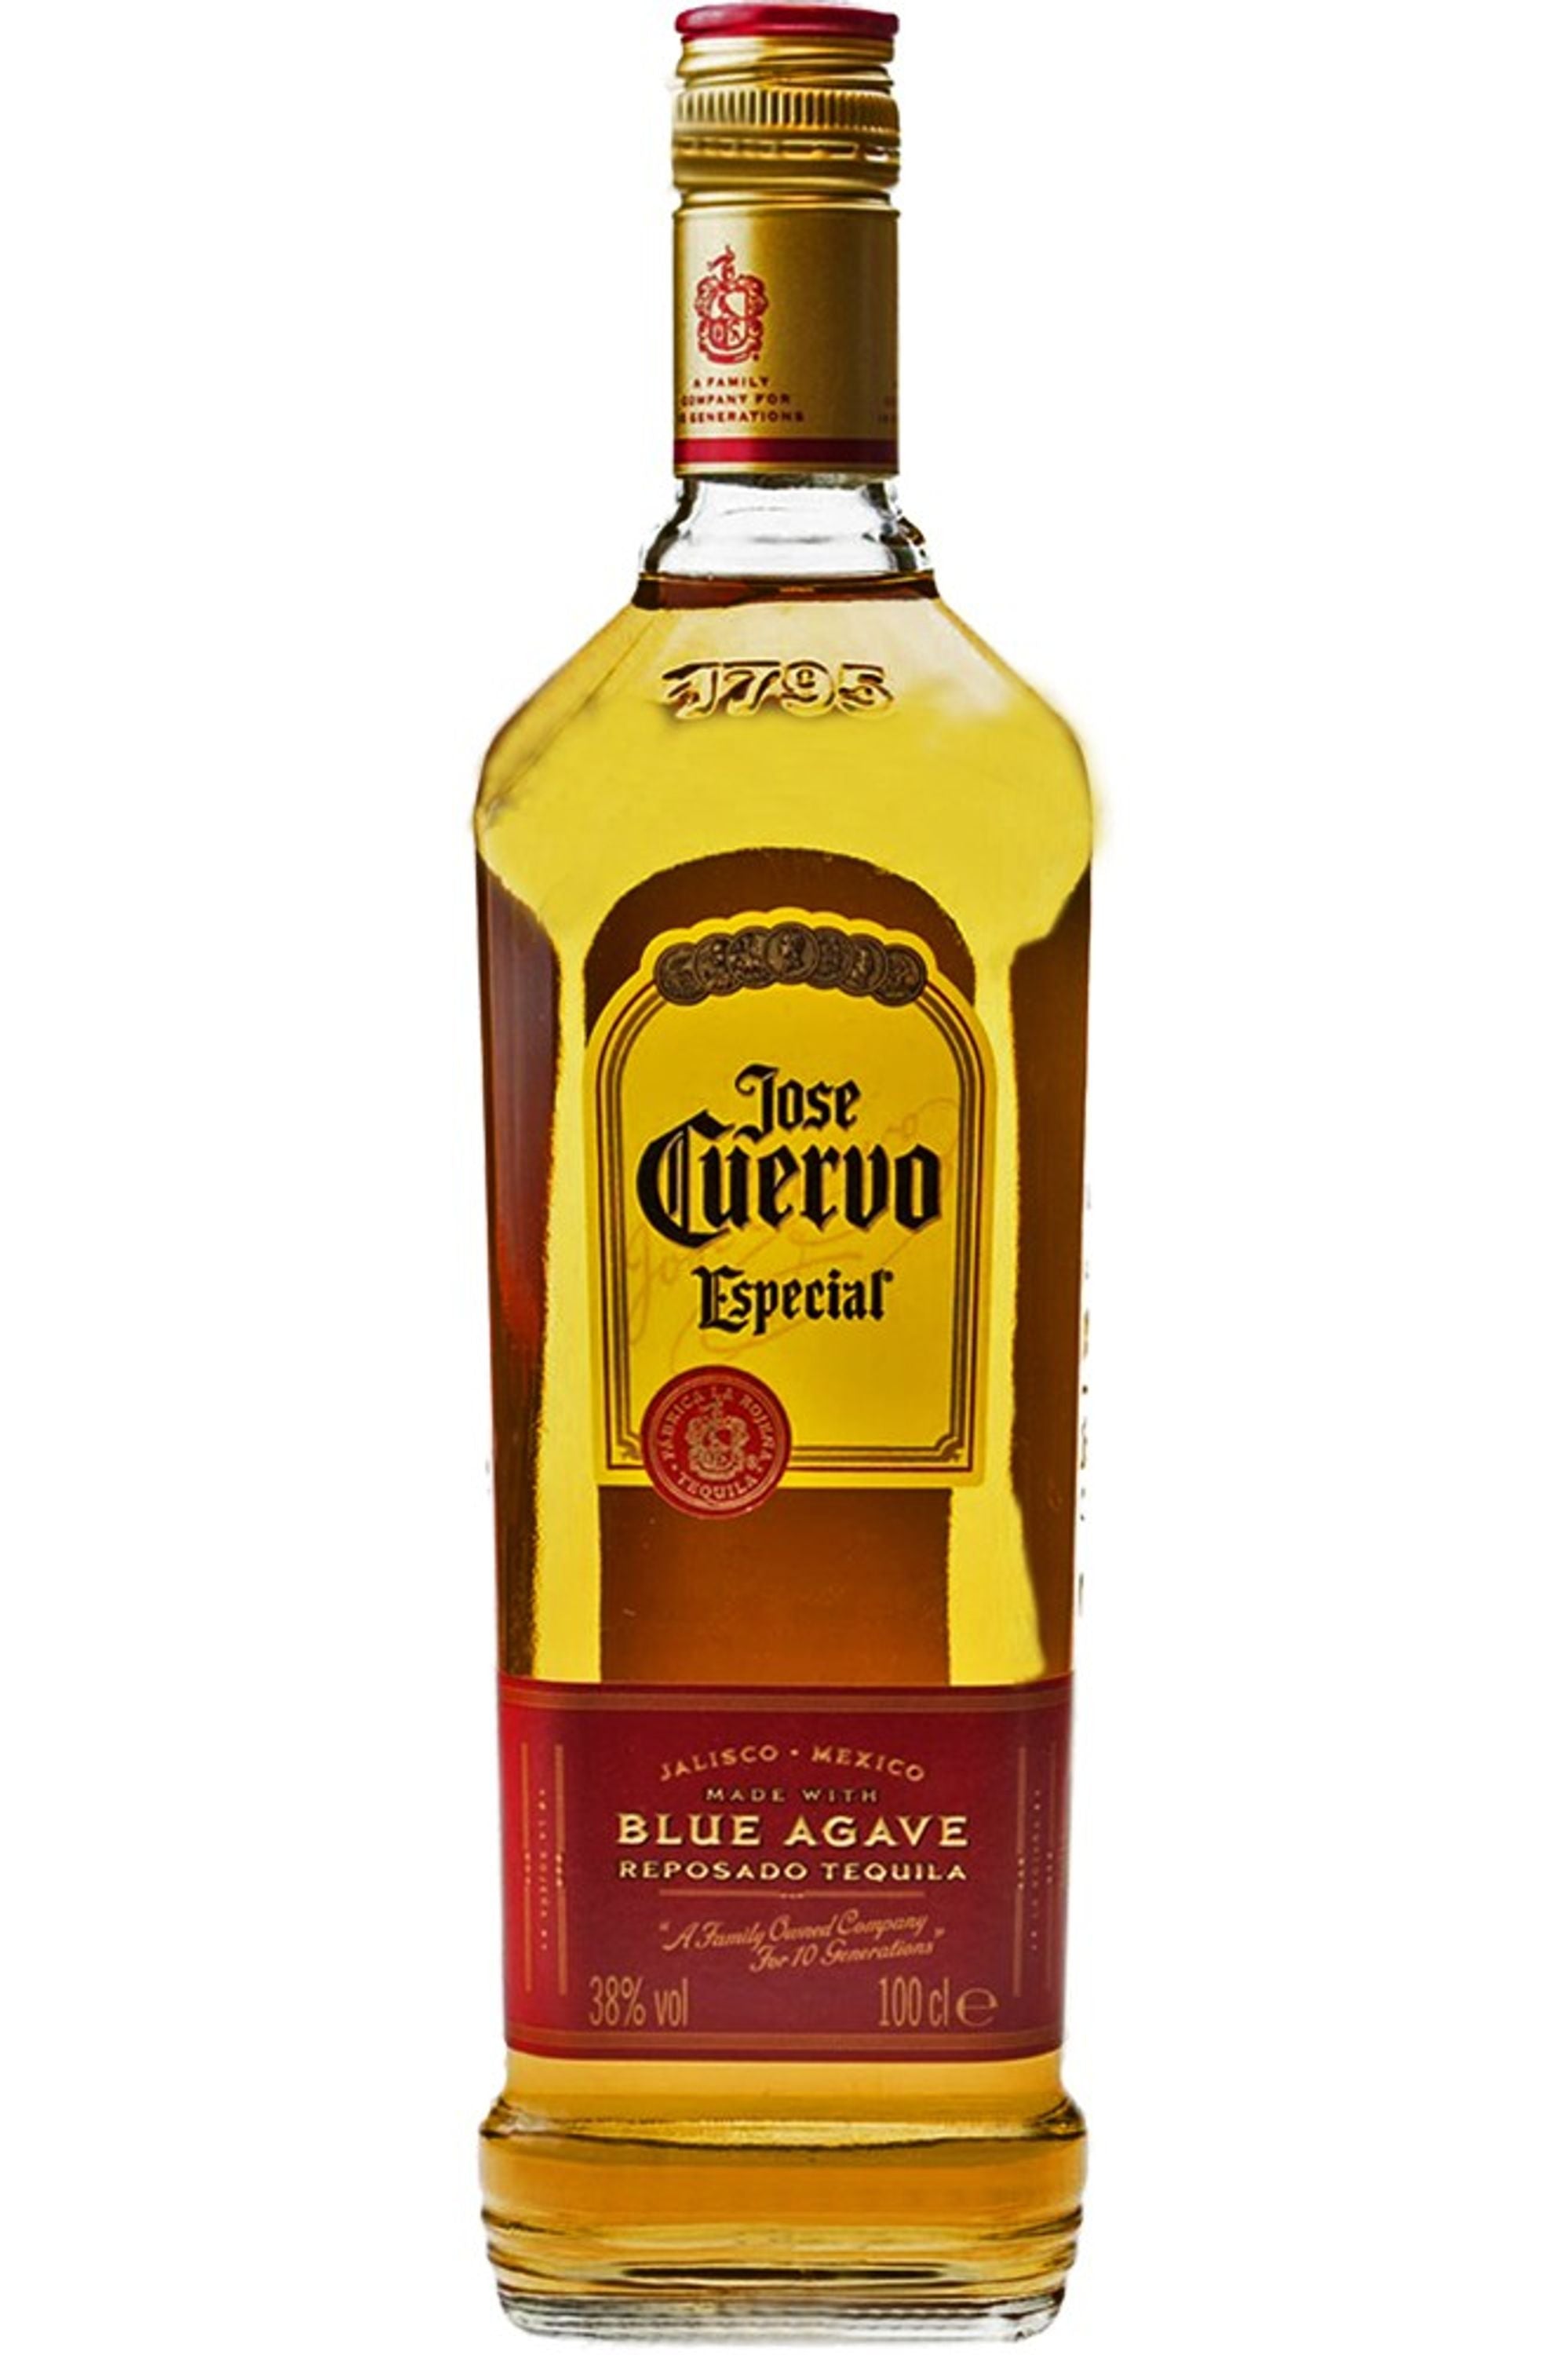 Jose Cuervo Especial Reposado 1.0l, alc. 38% Vol, Tequila Mexico